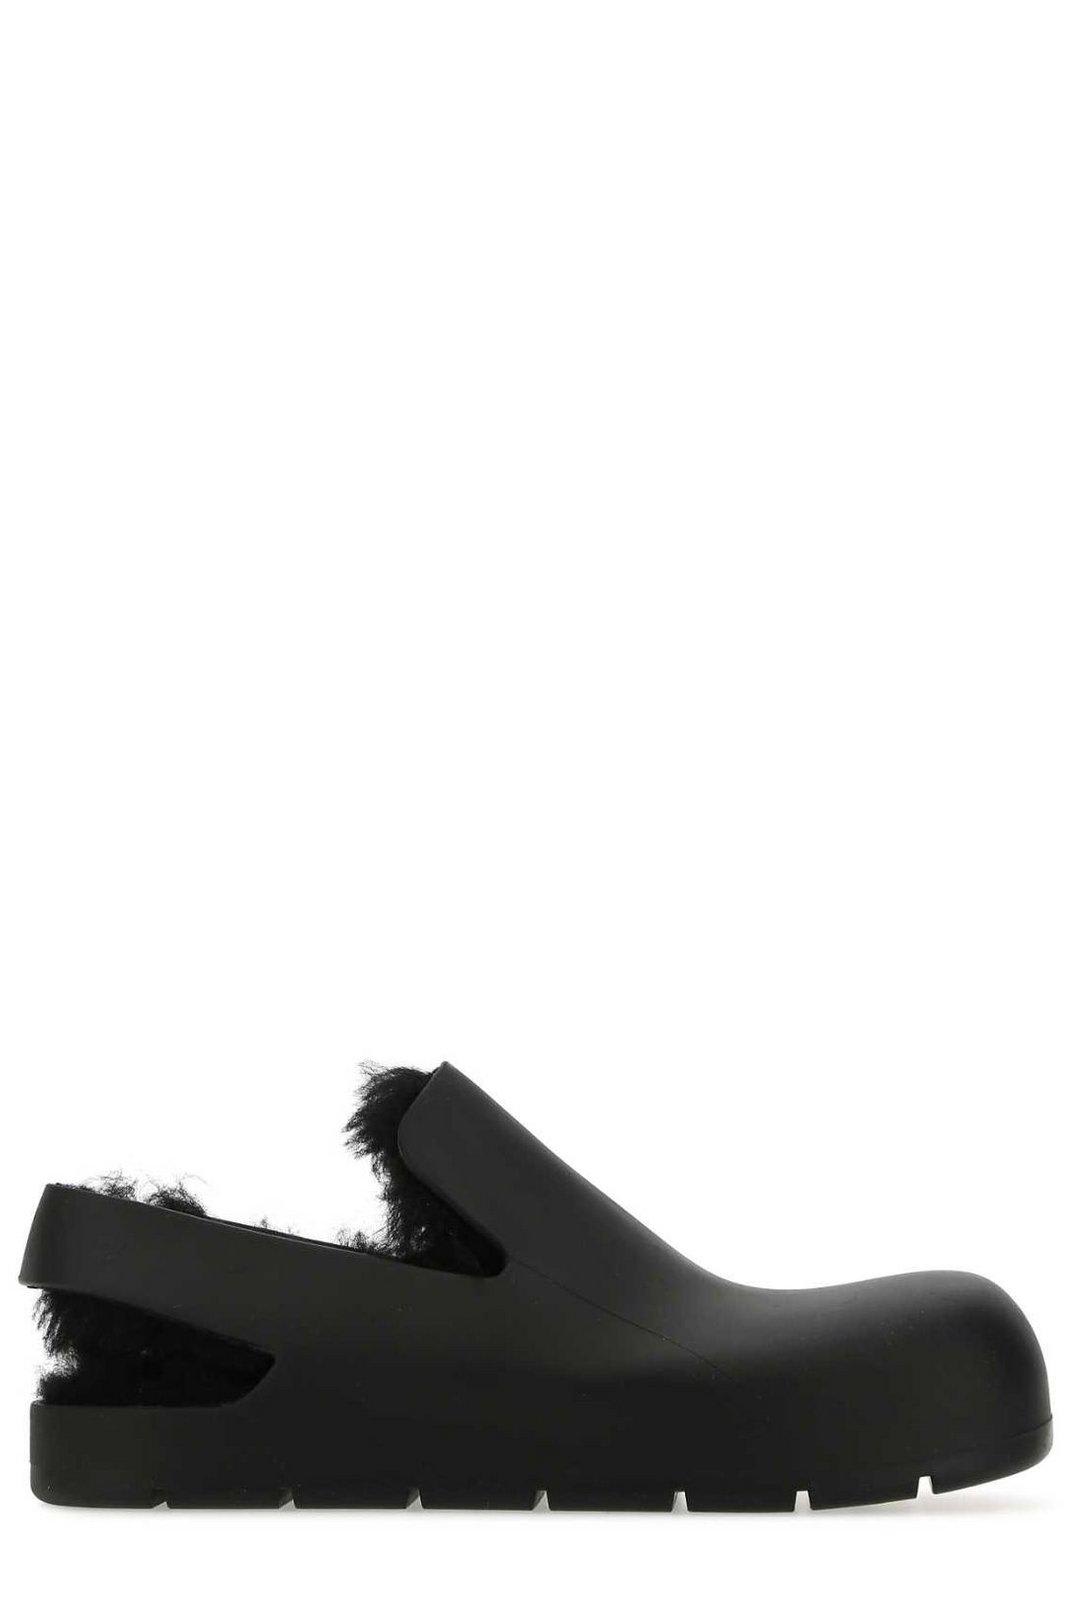 Bottega Veneta Puddle Slingback Sandals